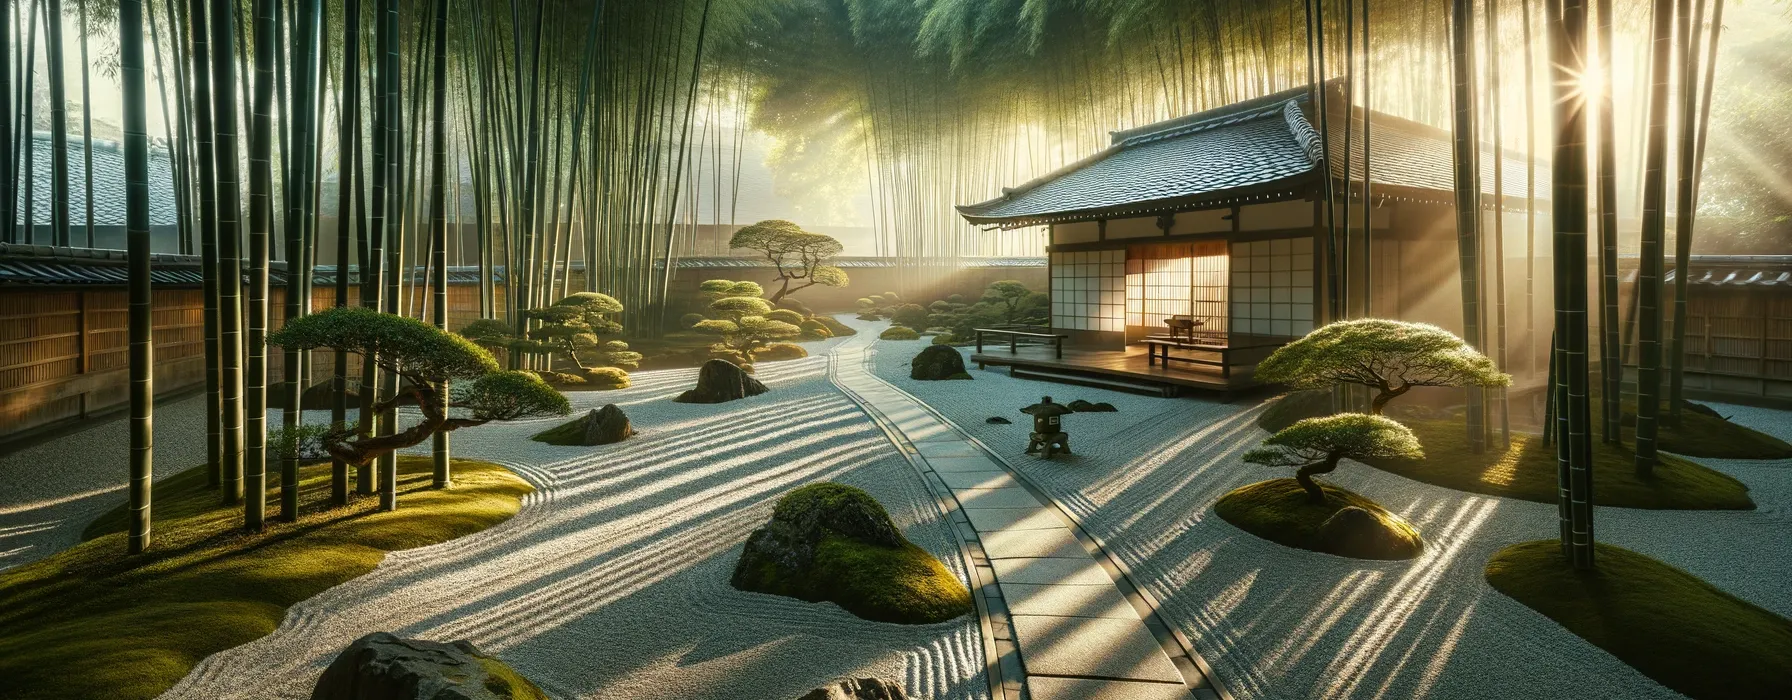 A serene Japanese Zen garden at dawn with soft sunlight filtering through bamboo trees